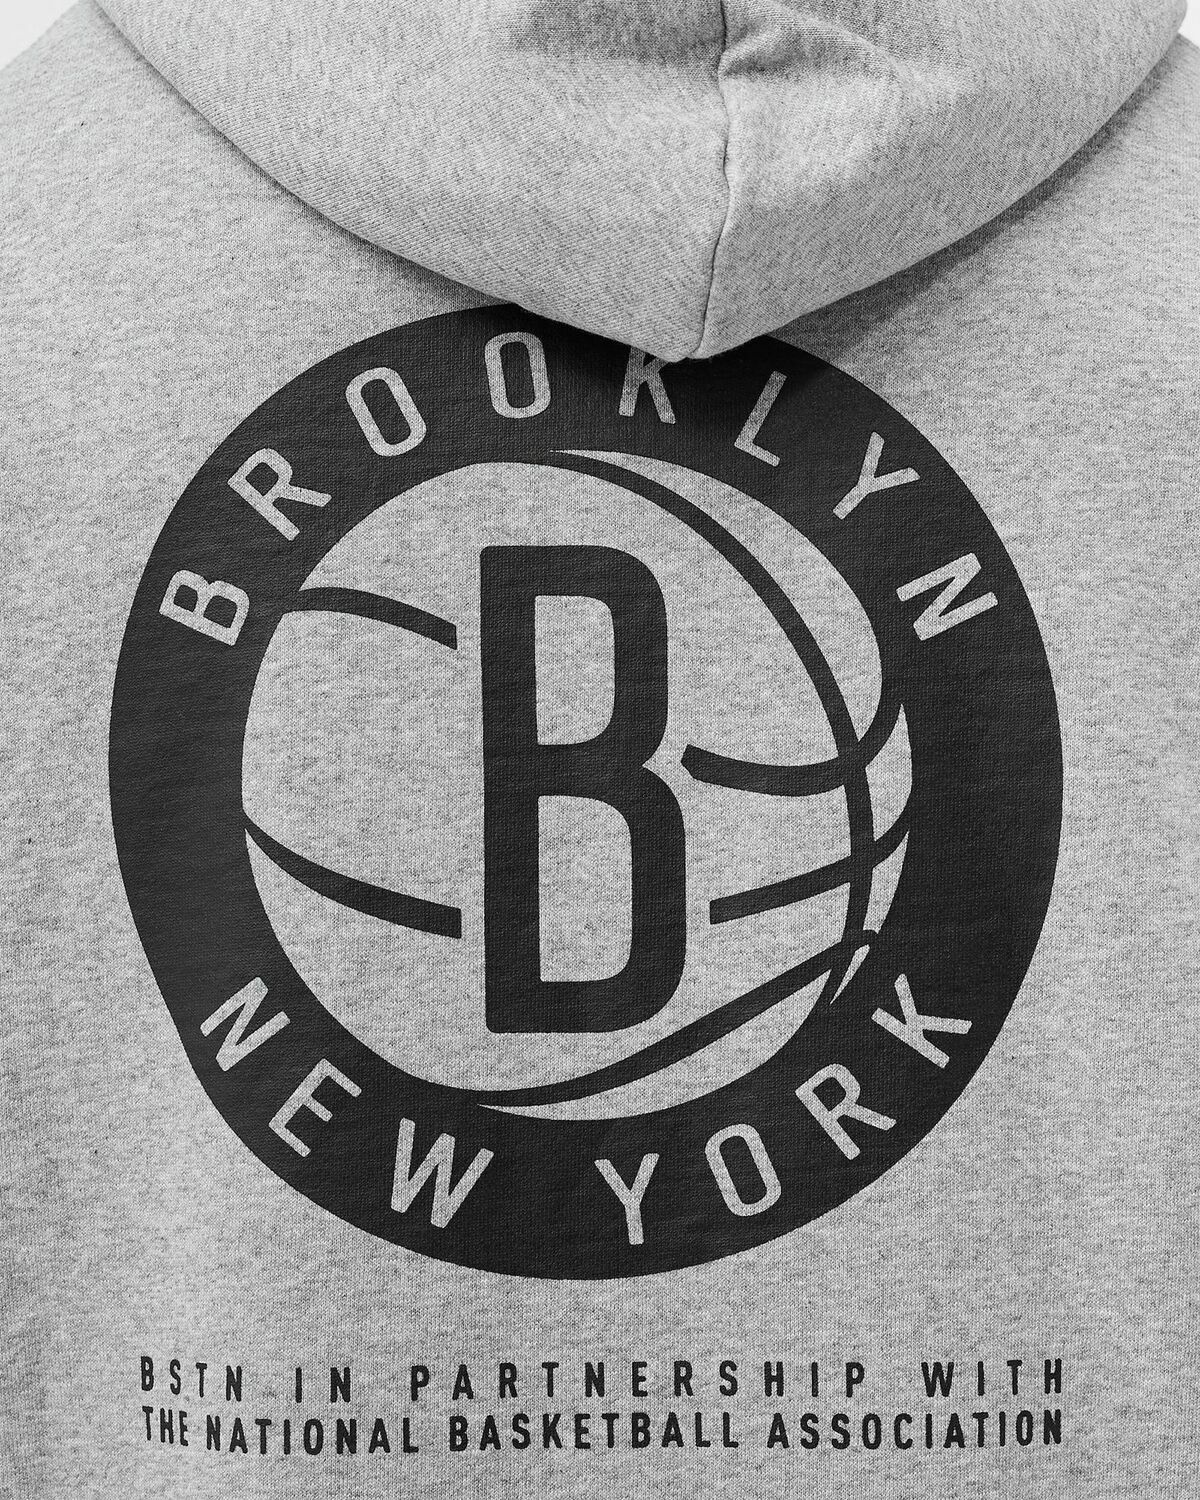 Bstn Brand Bstn & Nba Brooklyn Nets Hoody Grey - Mens - Hoodies